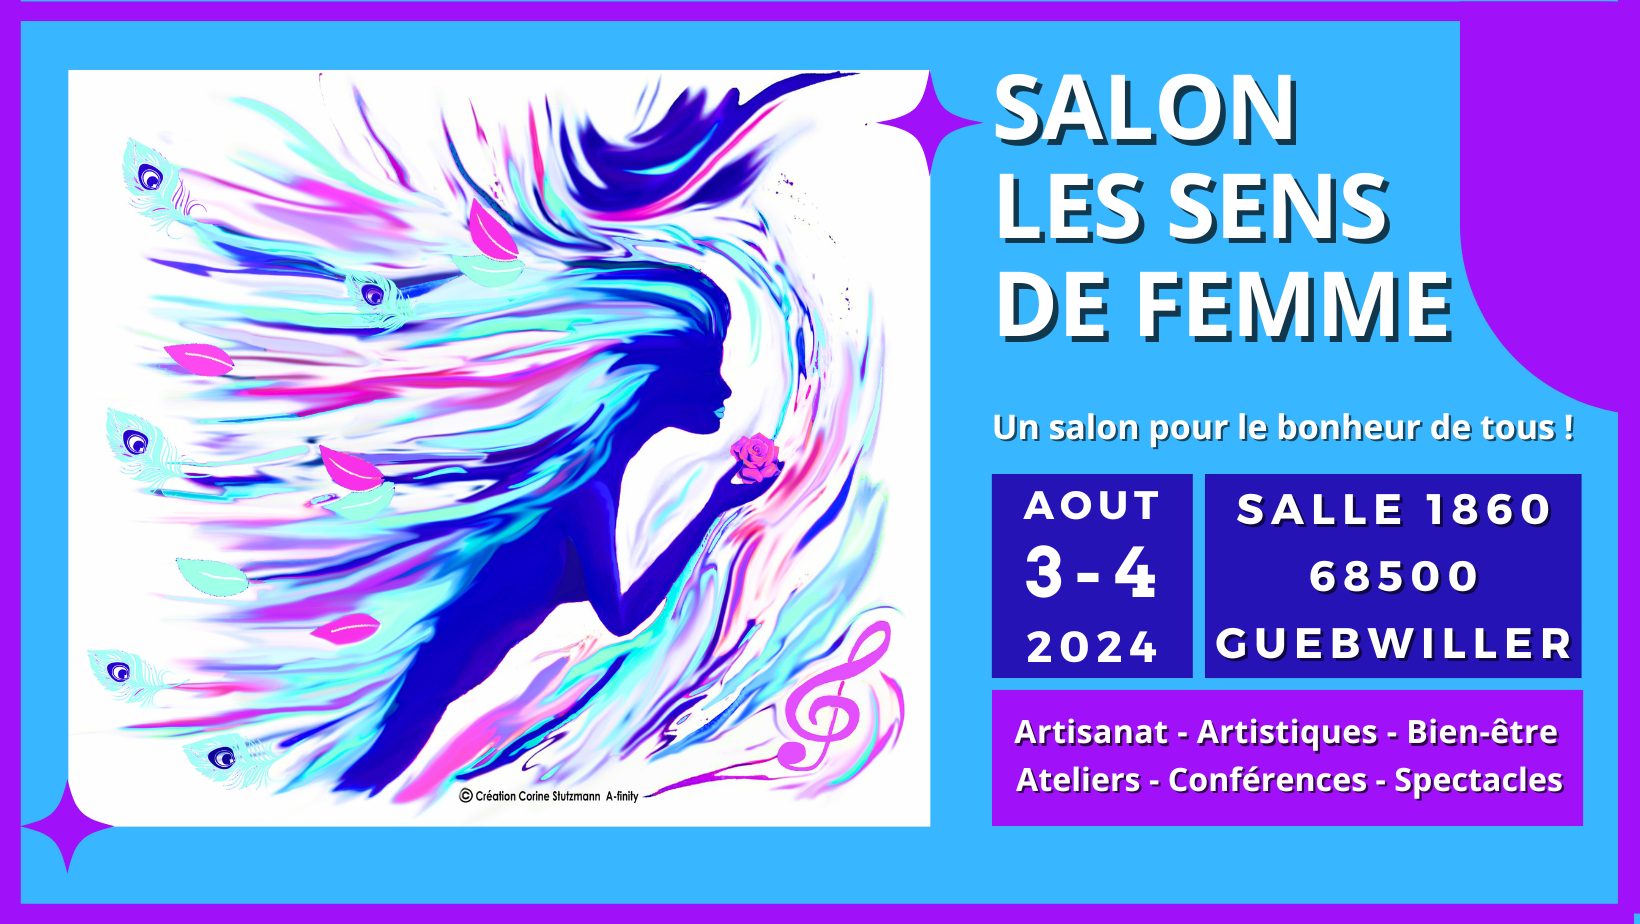 Salon Les Sens de Femme - Guebwiller - Août 2024